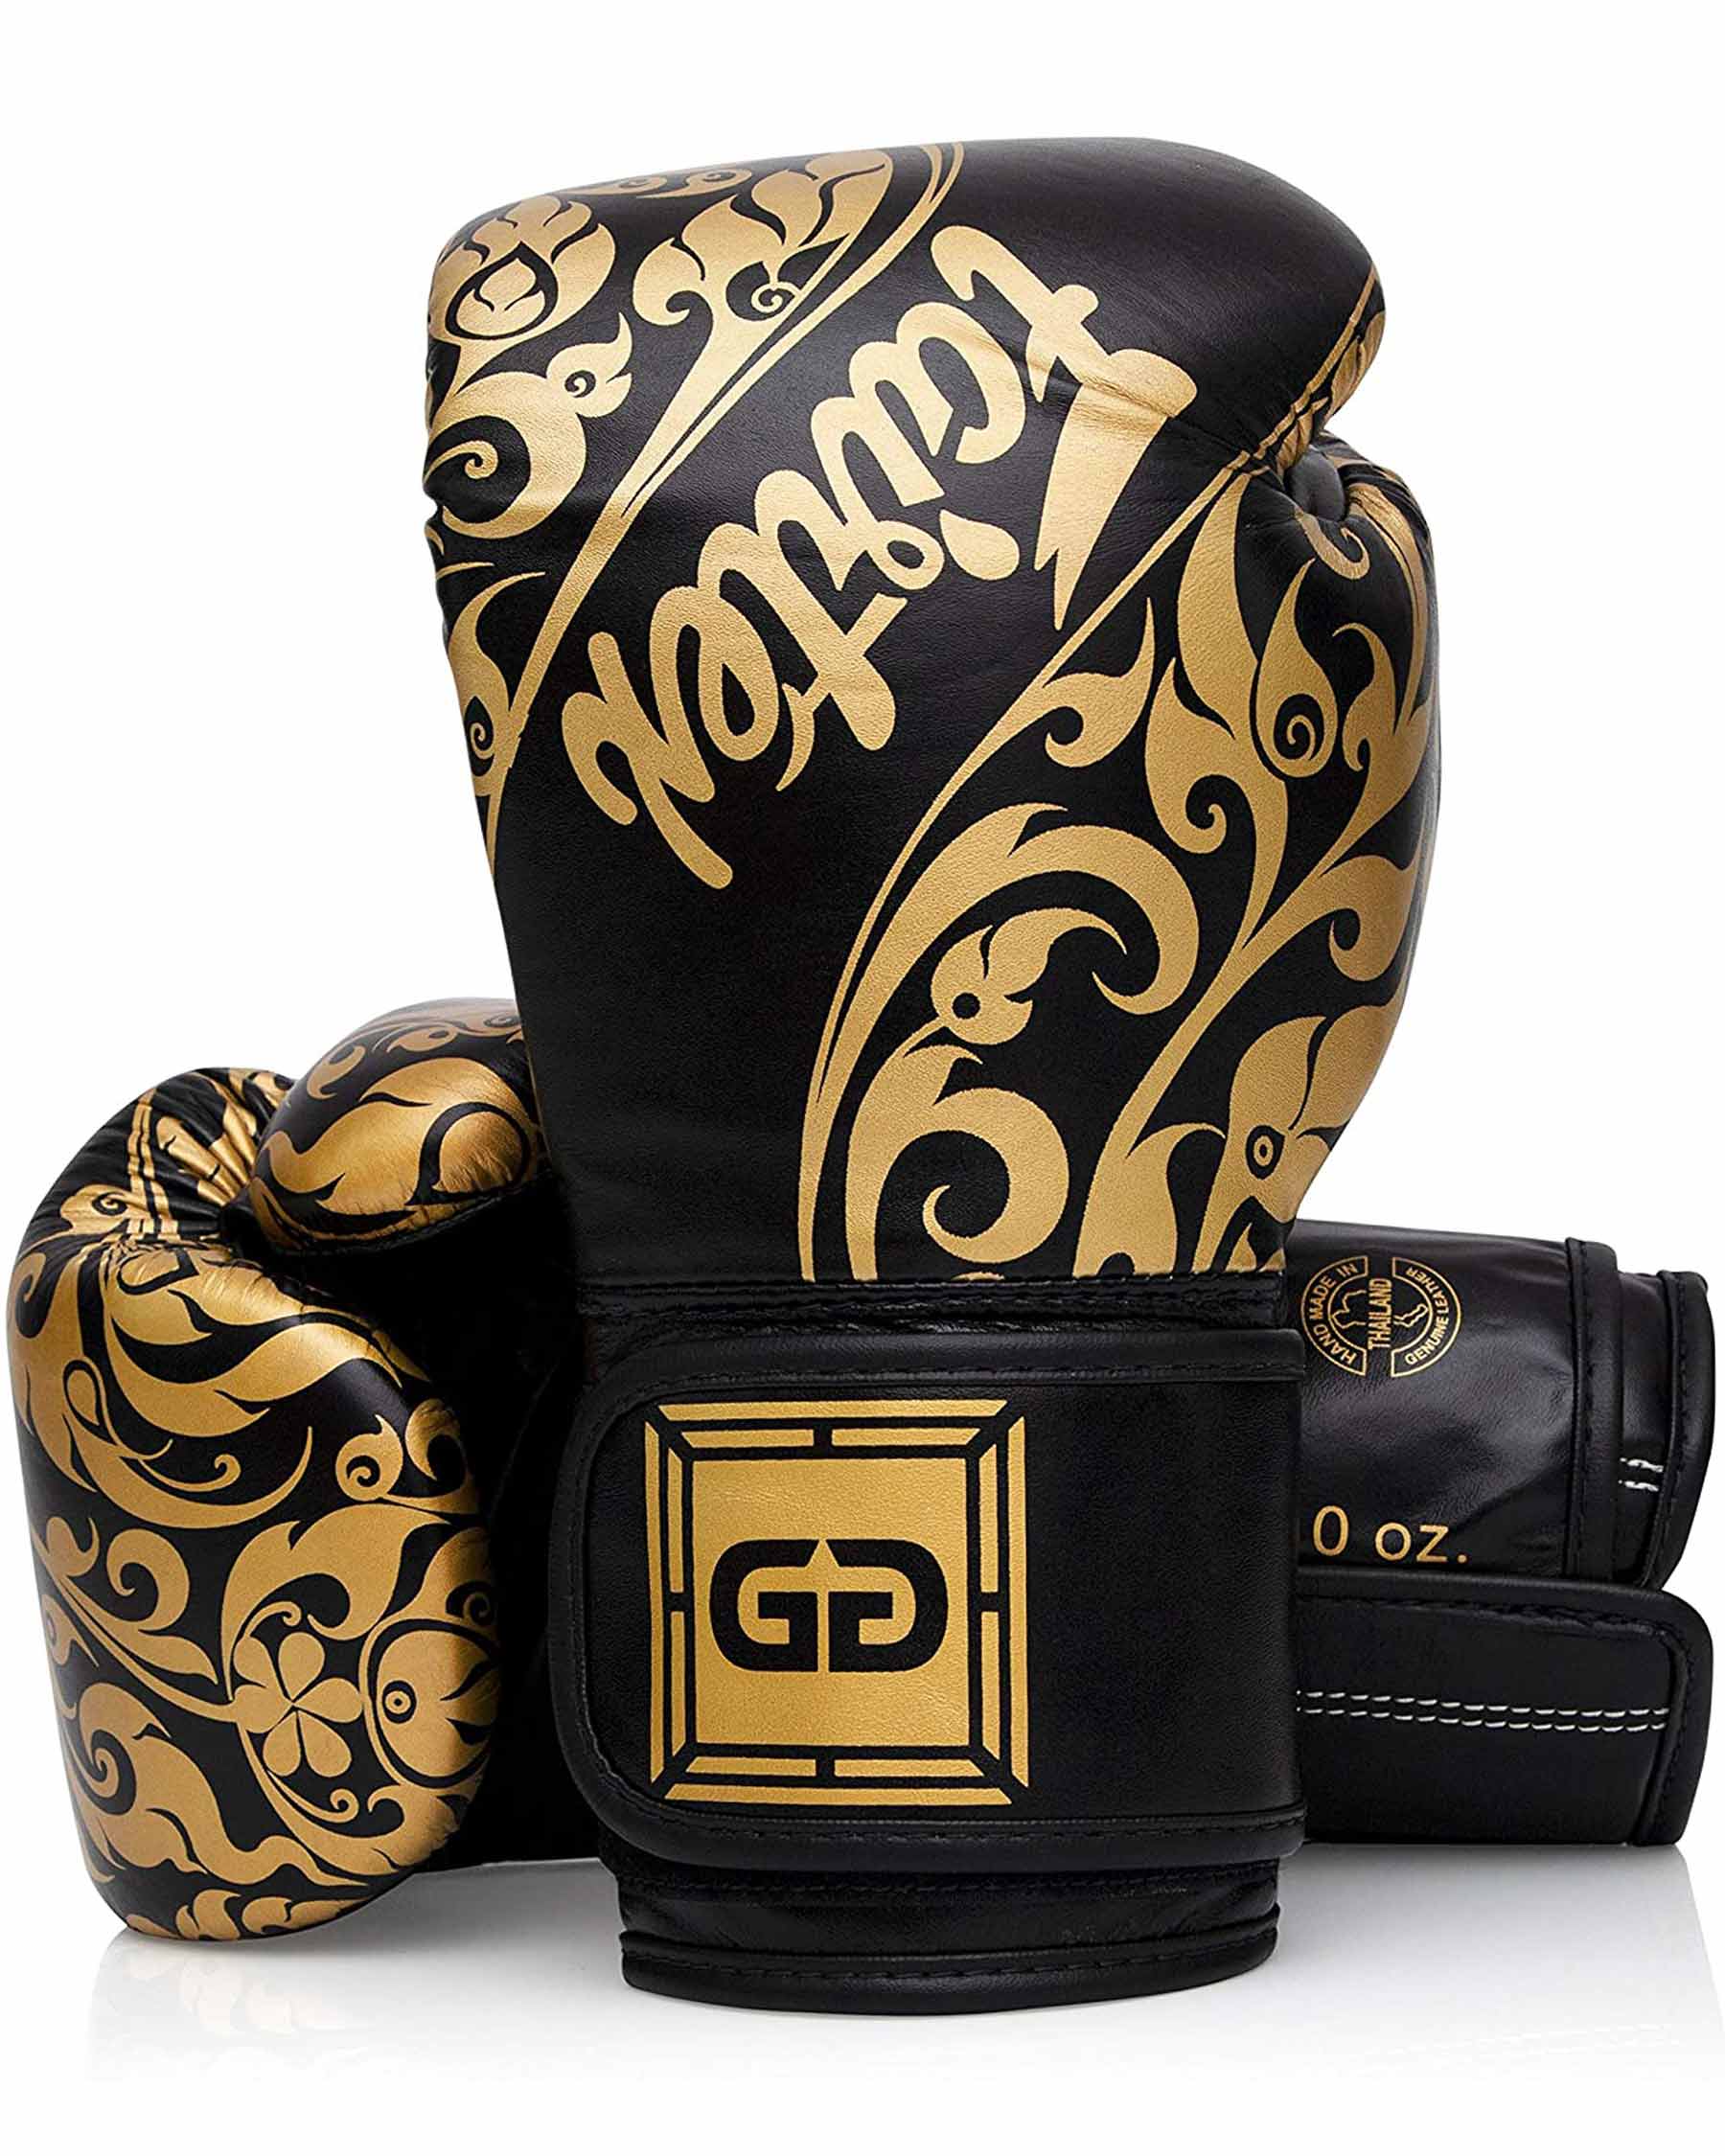 Fairtex / Glory leather boxing gloves BGVG2 - Boxing gloves, training  gloves and sparring gloves - Fairtex, Muay Thai and MMA Shop